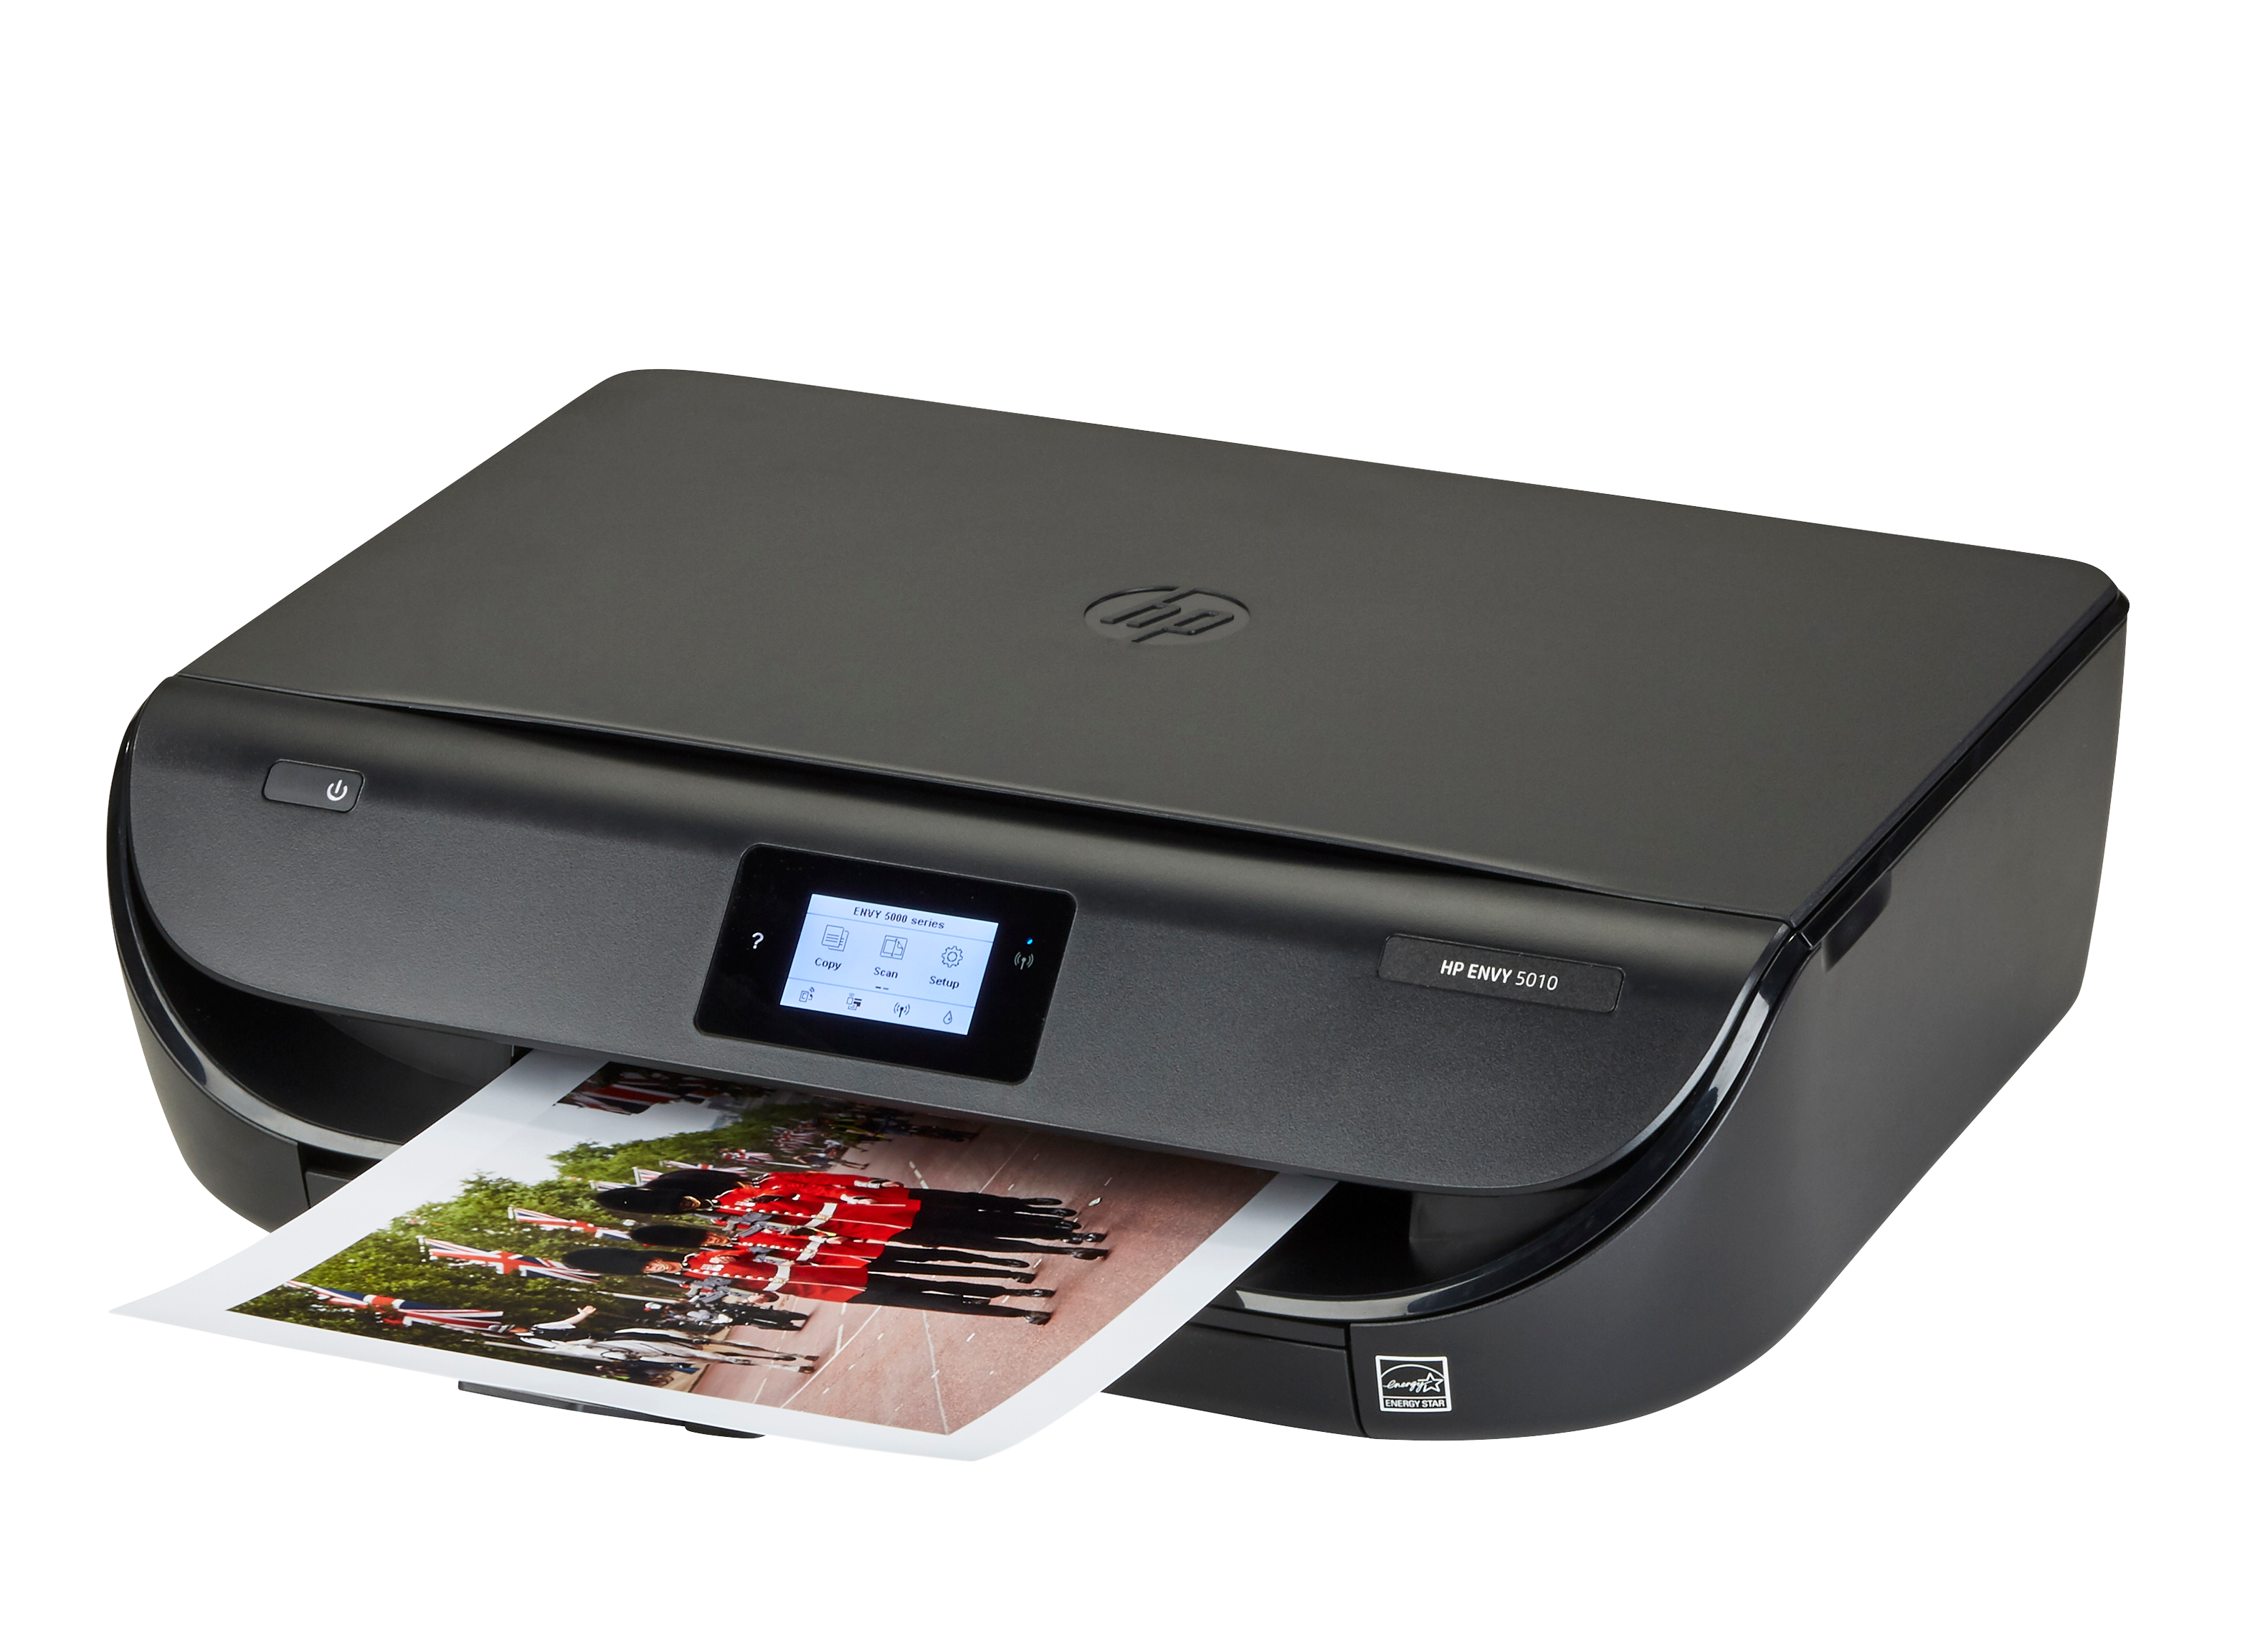 Hotellet fængsel skære ned HP Envy 5010 Printer Review - Consumer Reports